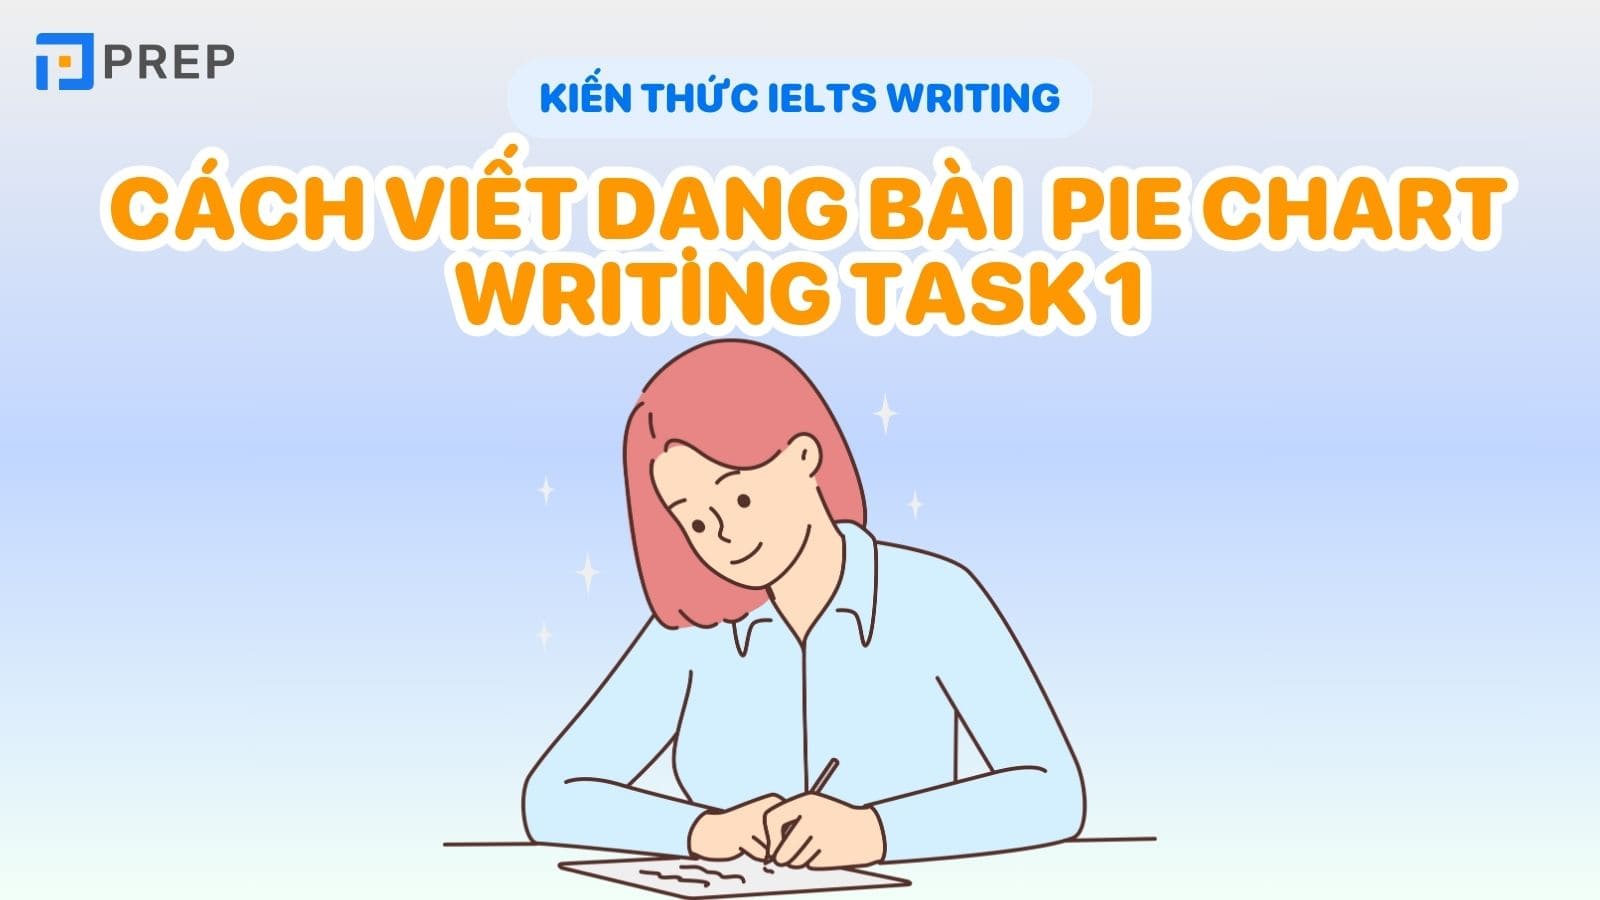 cach-viet-dang-bai-pie-chart-writing-task-1.jpg